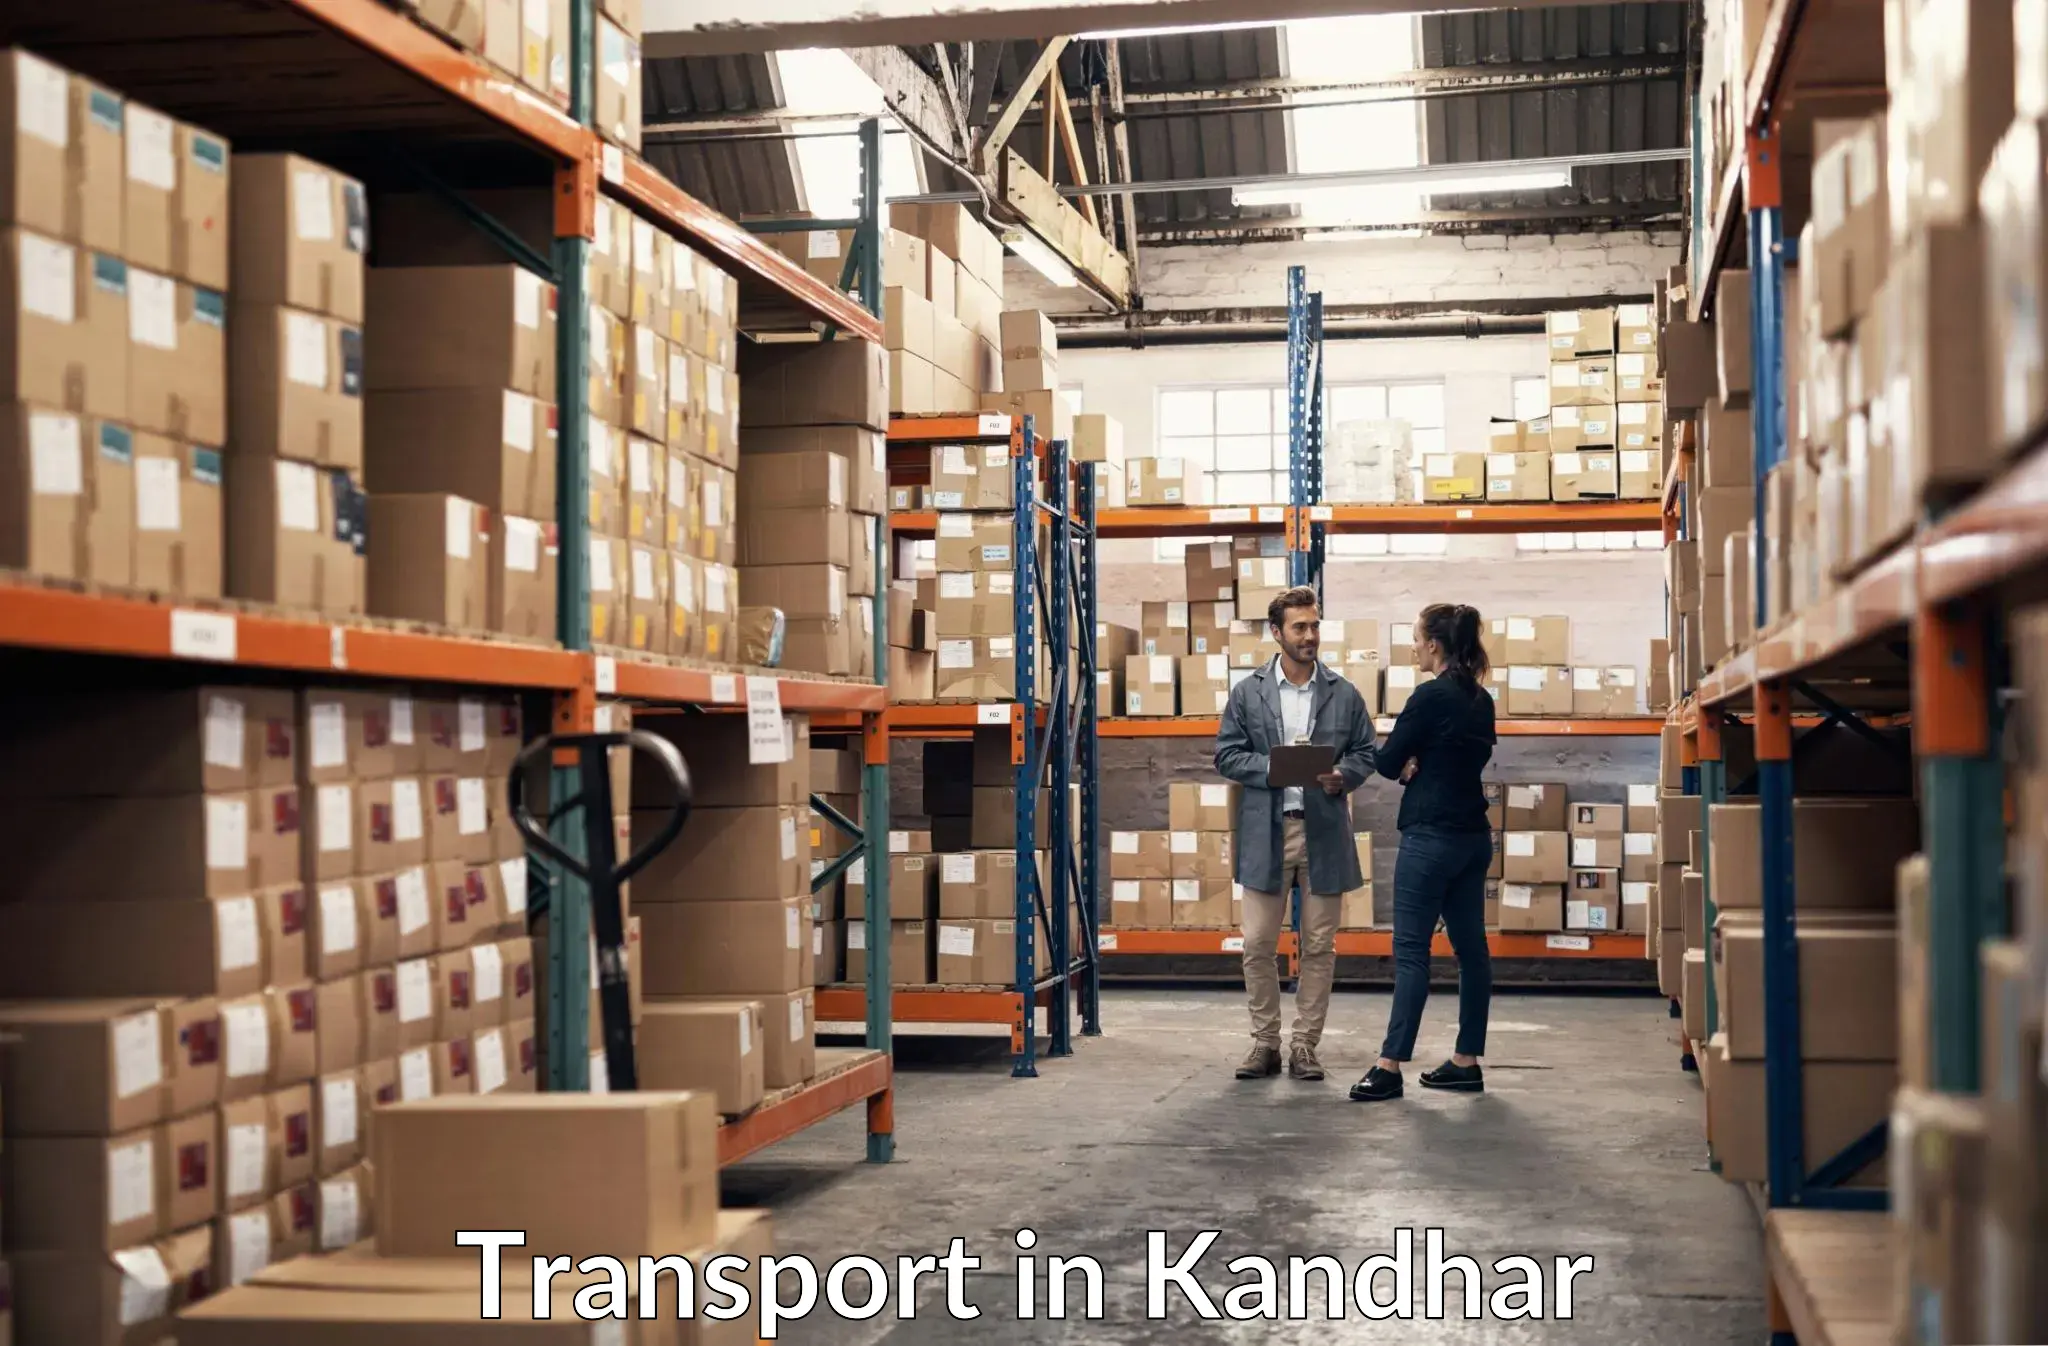 Intercity transport in Kandhar